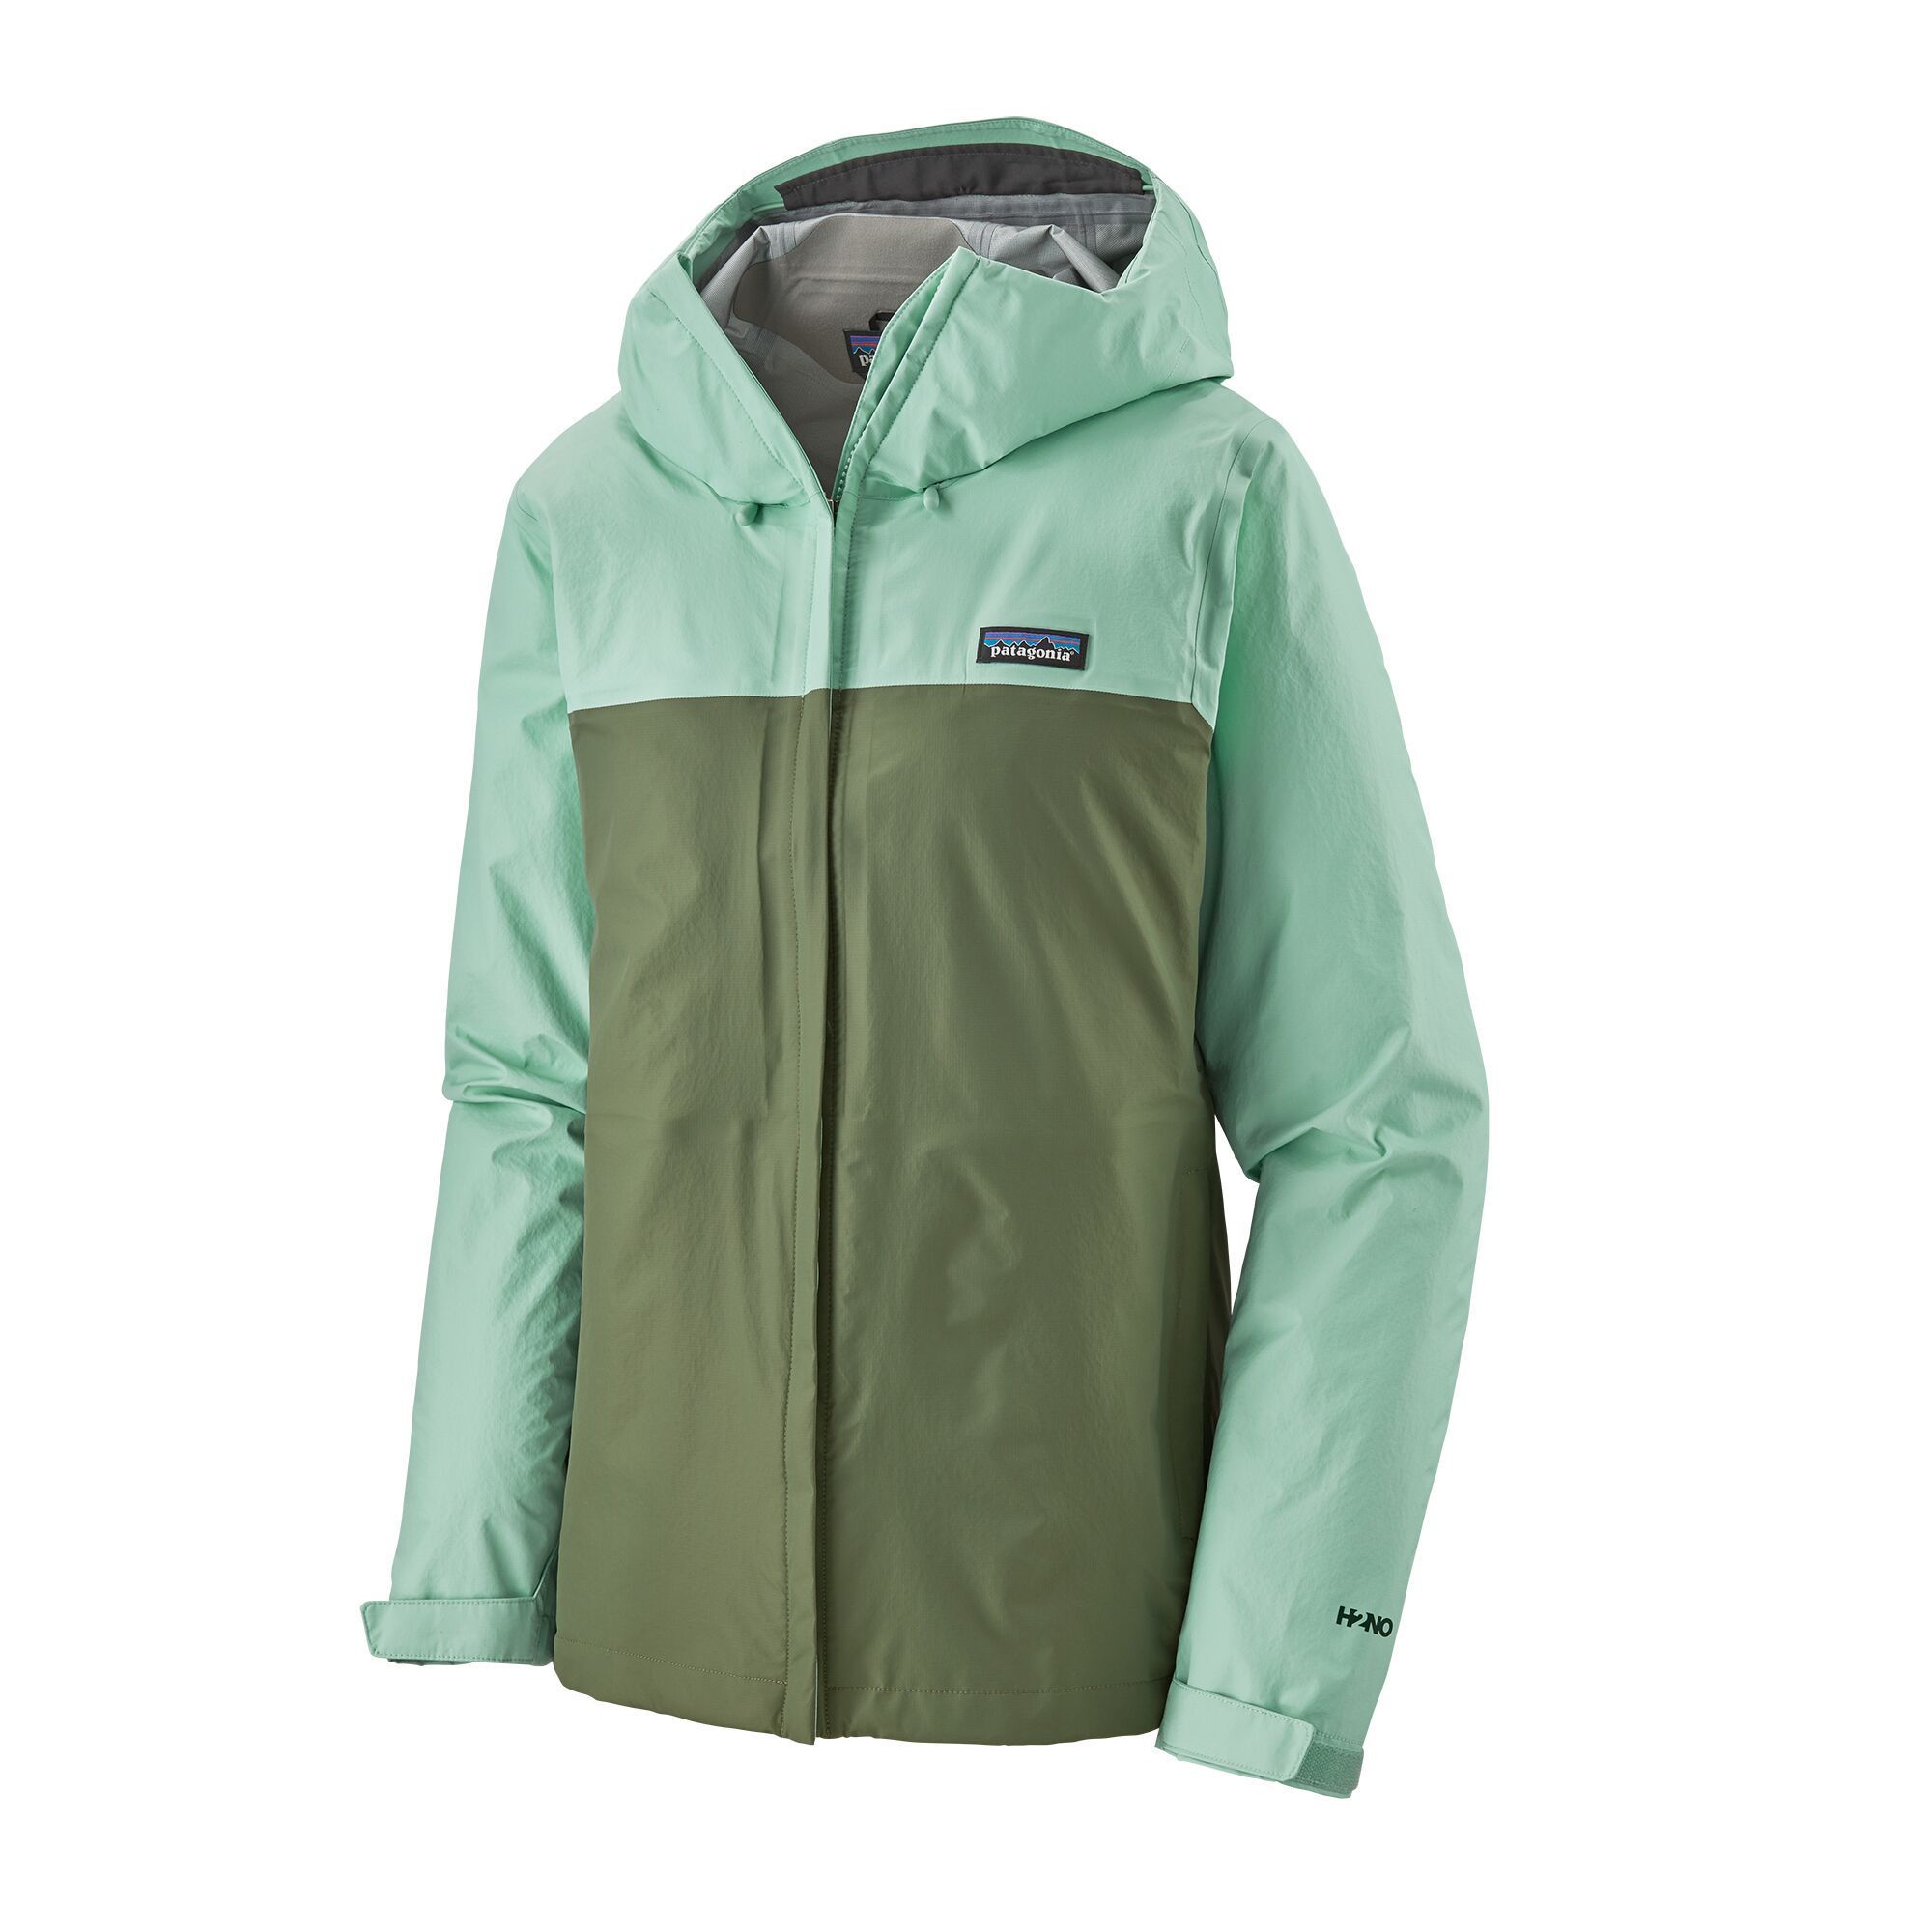 Patagonia Women's Torrentshell 3-layer Jacket - 100% Recycled Nylon, Gypsum Green / S